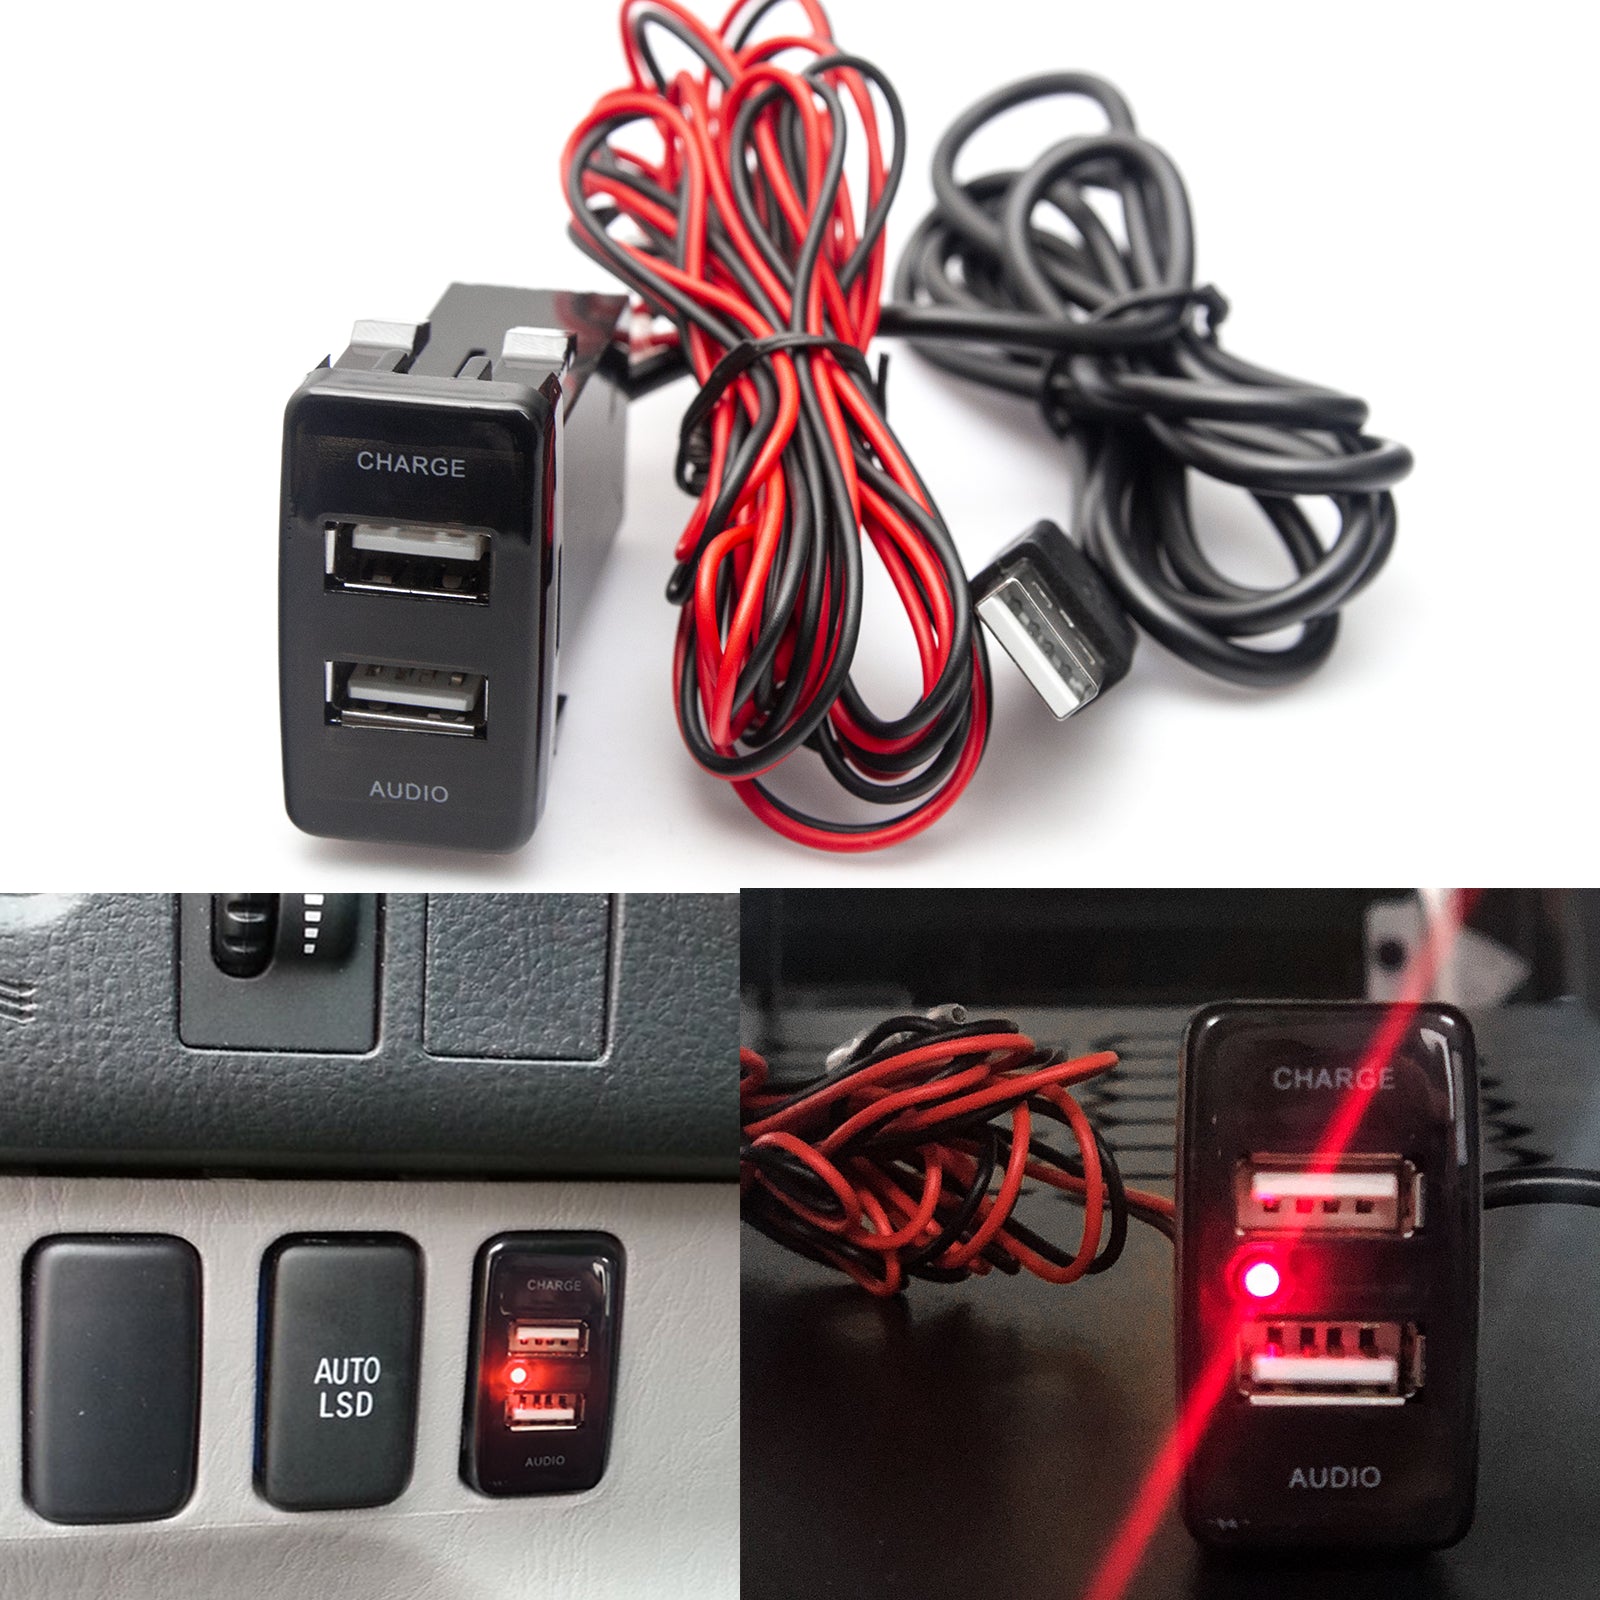 Charging - Dual USB 12V Car Charger